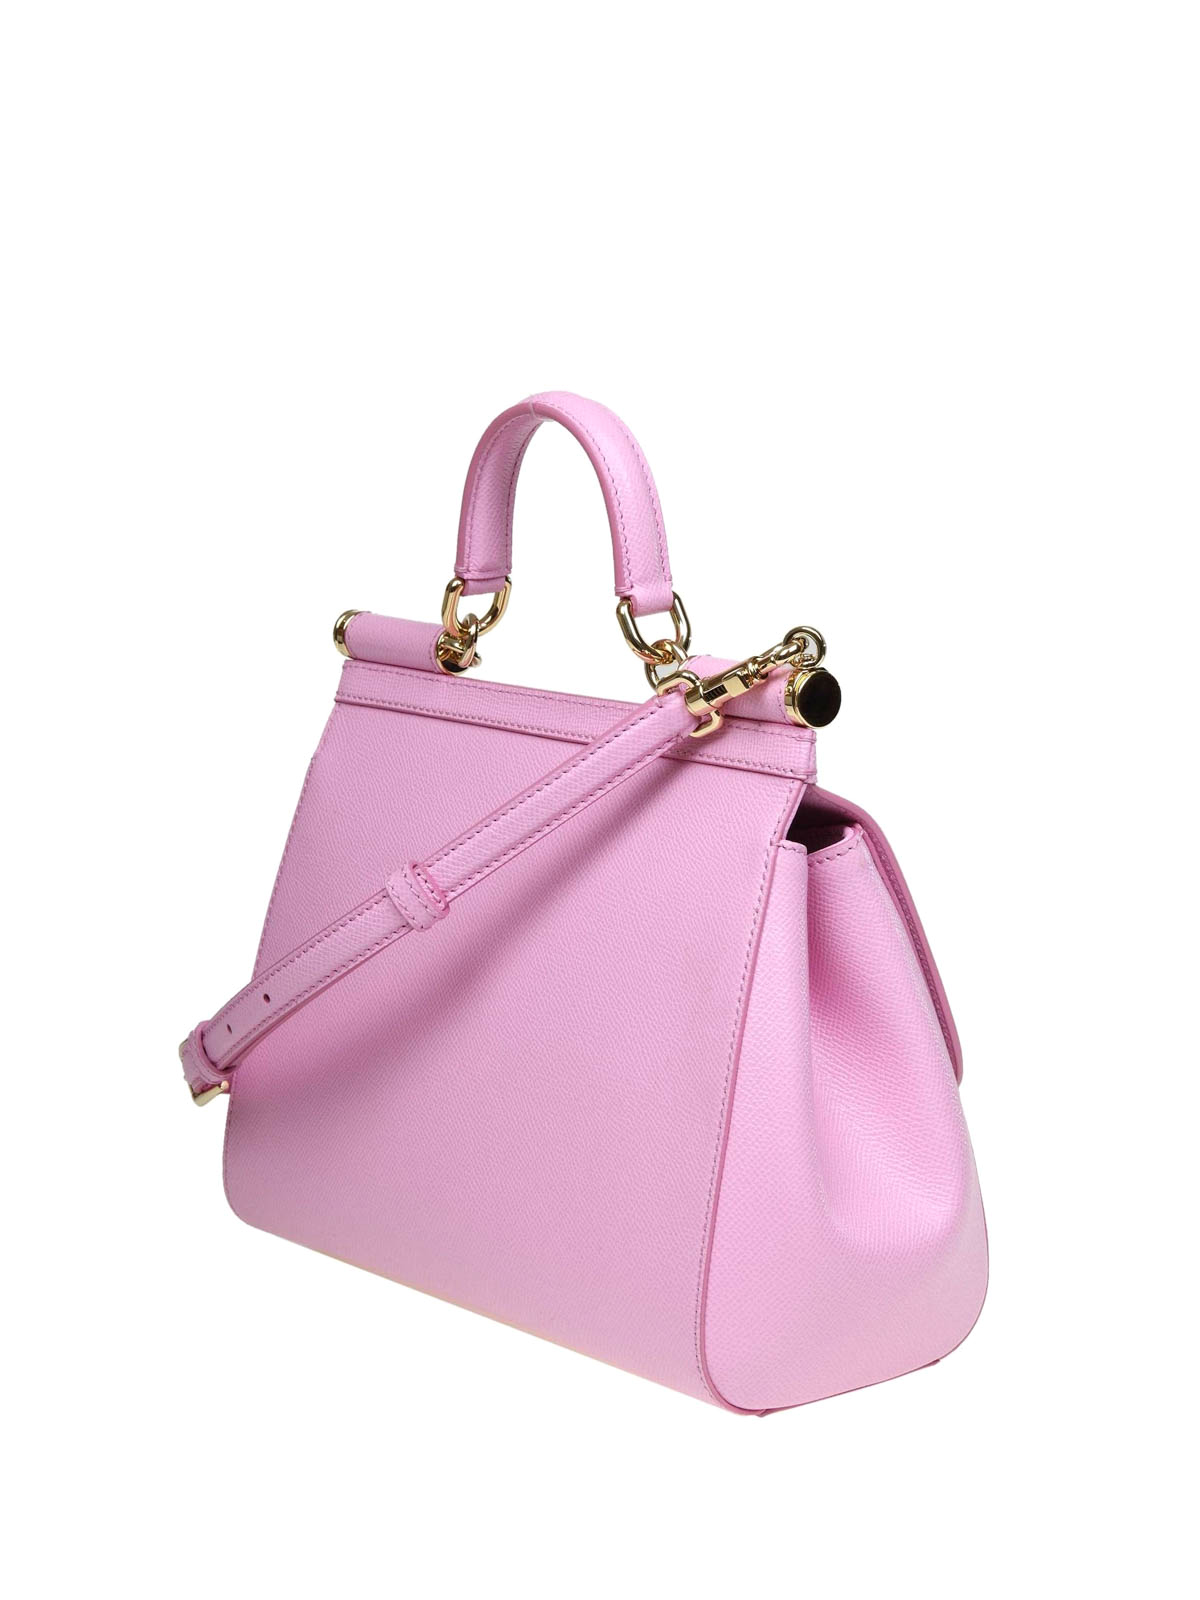 Dolce & Gabbana Metallic Pink Leather Medium Miss Sicily Top Handle Bag  Dolce & Gabbana